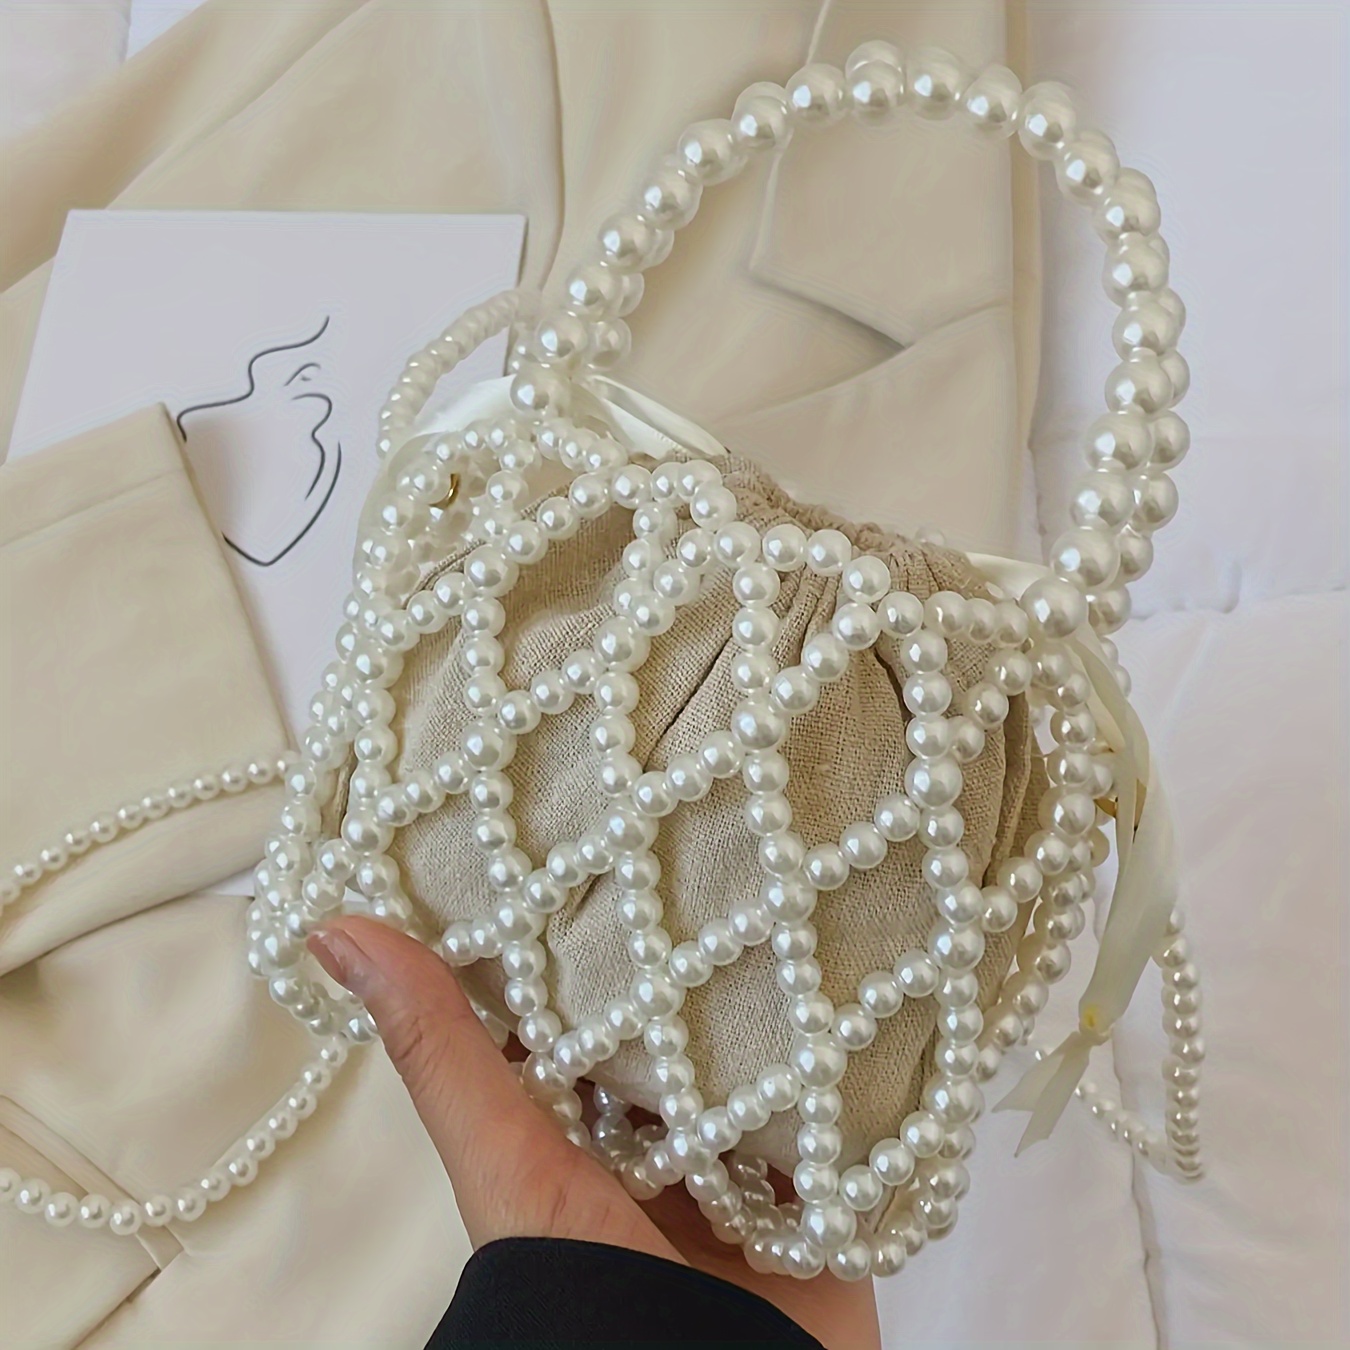 Fashionable Casual Faux Pearl Mini Purse Hanging Decoration